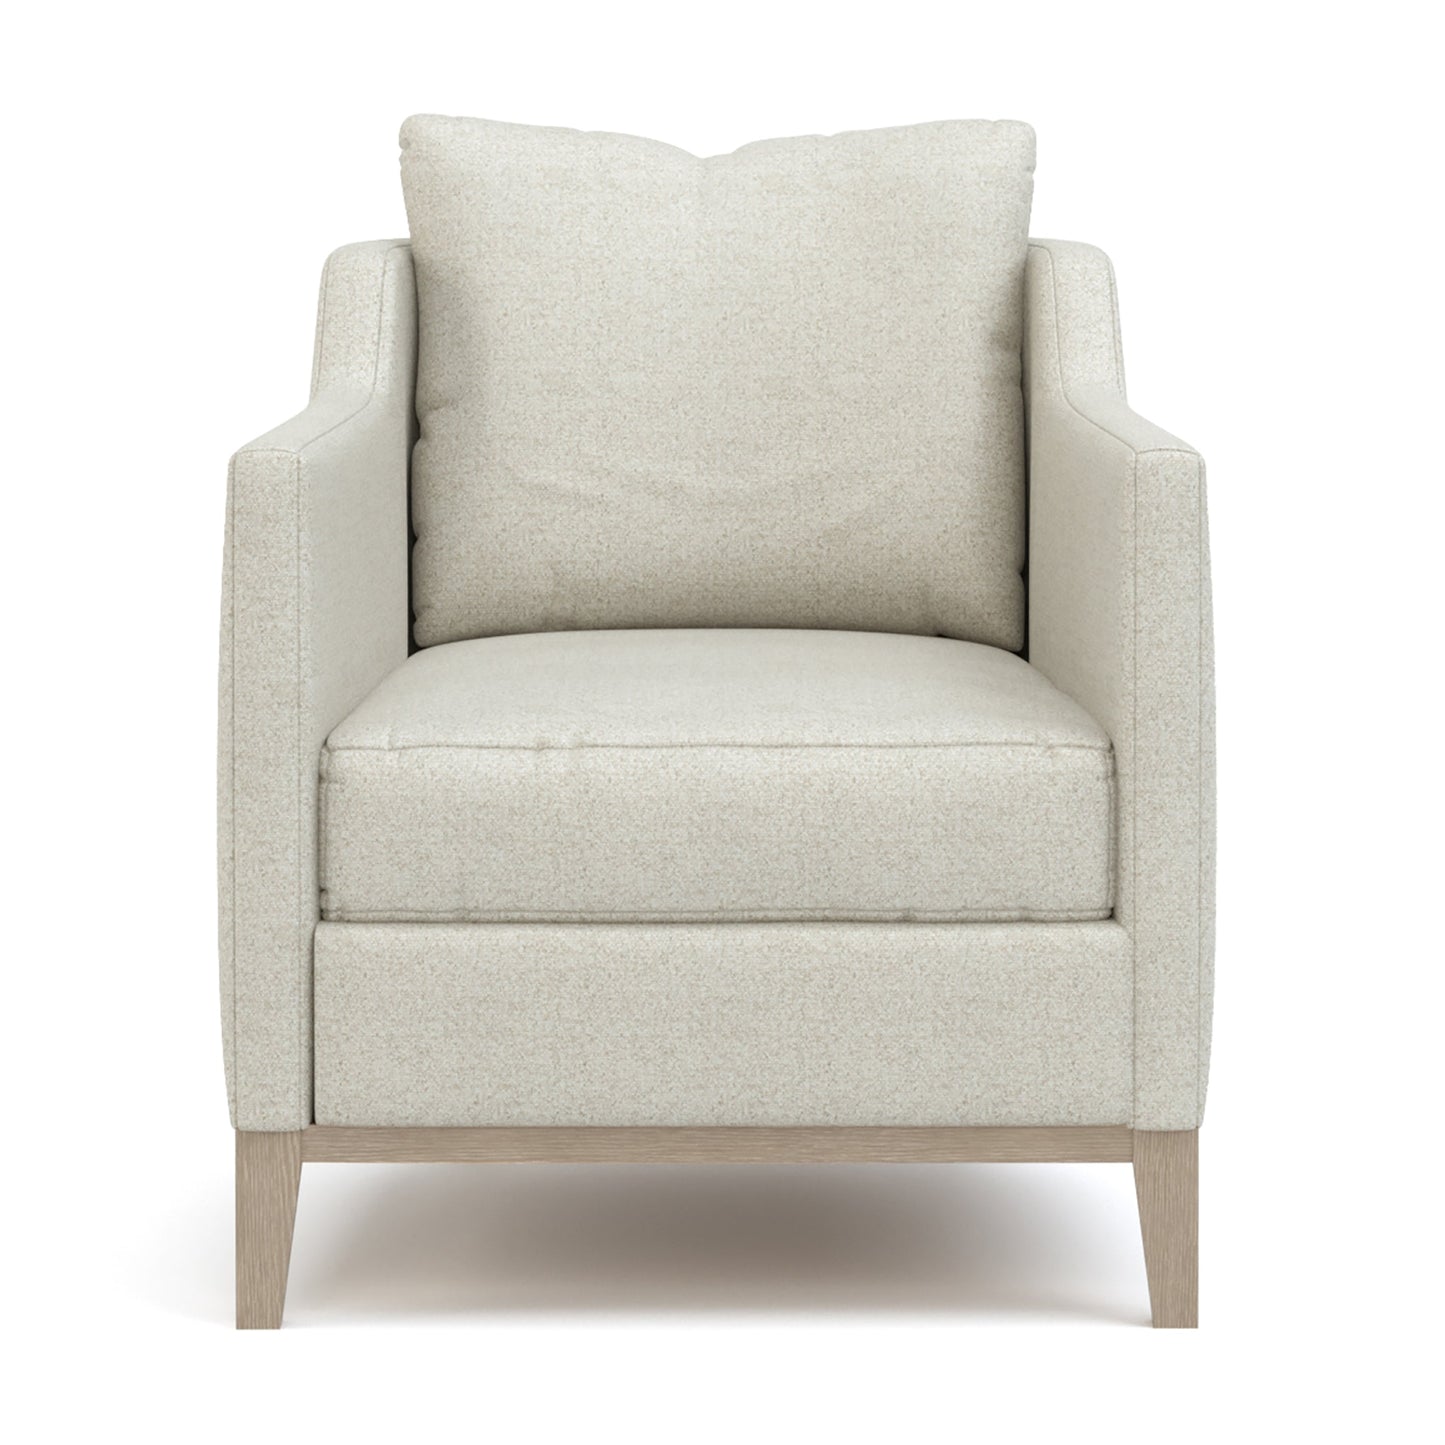 Maidstone Chair in 201 Sandbank finish and 7641-15 fabric